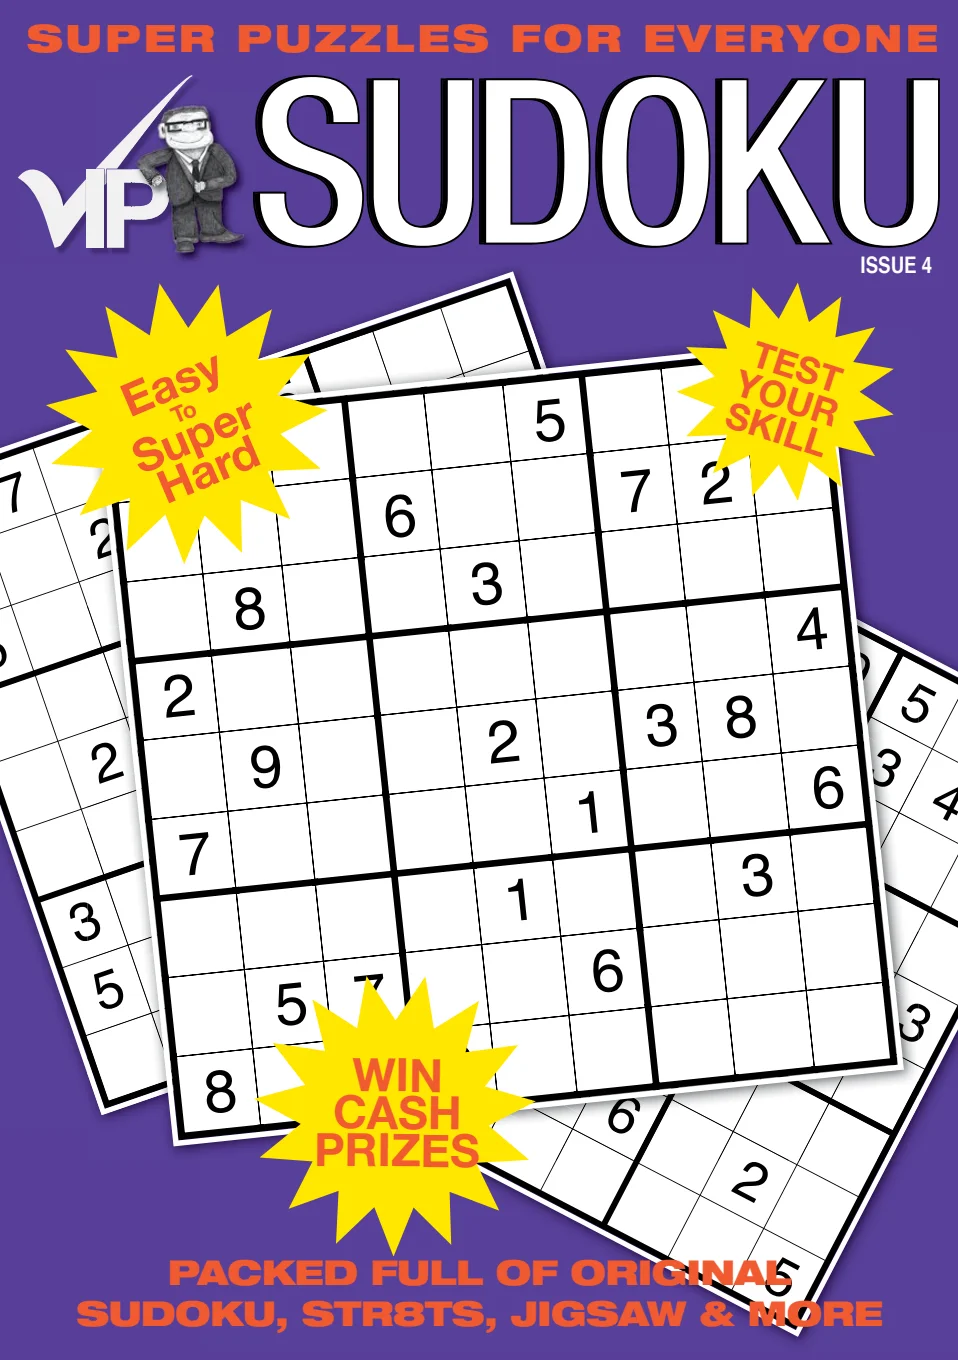 VIP Sudoku